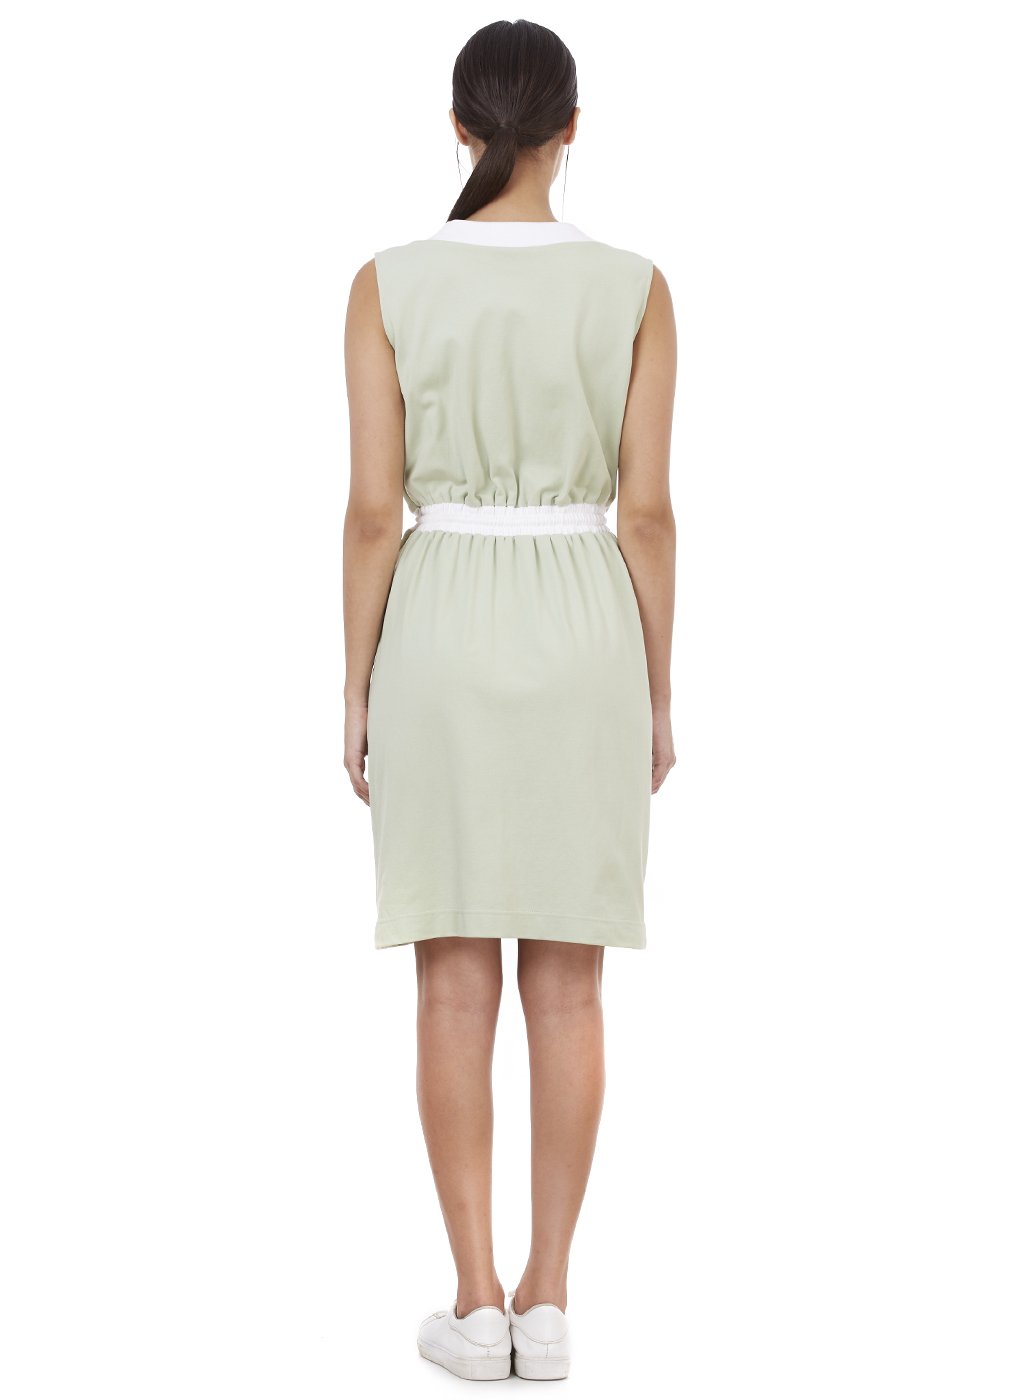 Ivy  Dress - Genes online store 2020